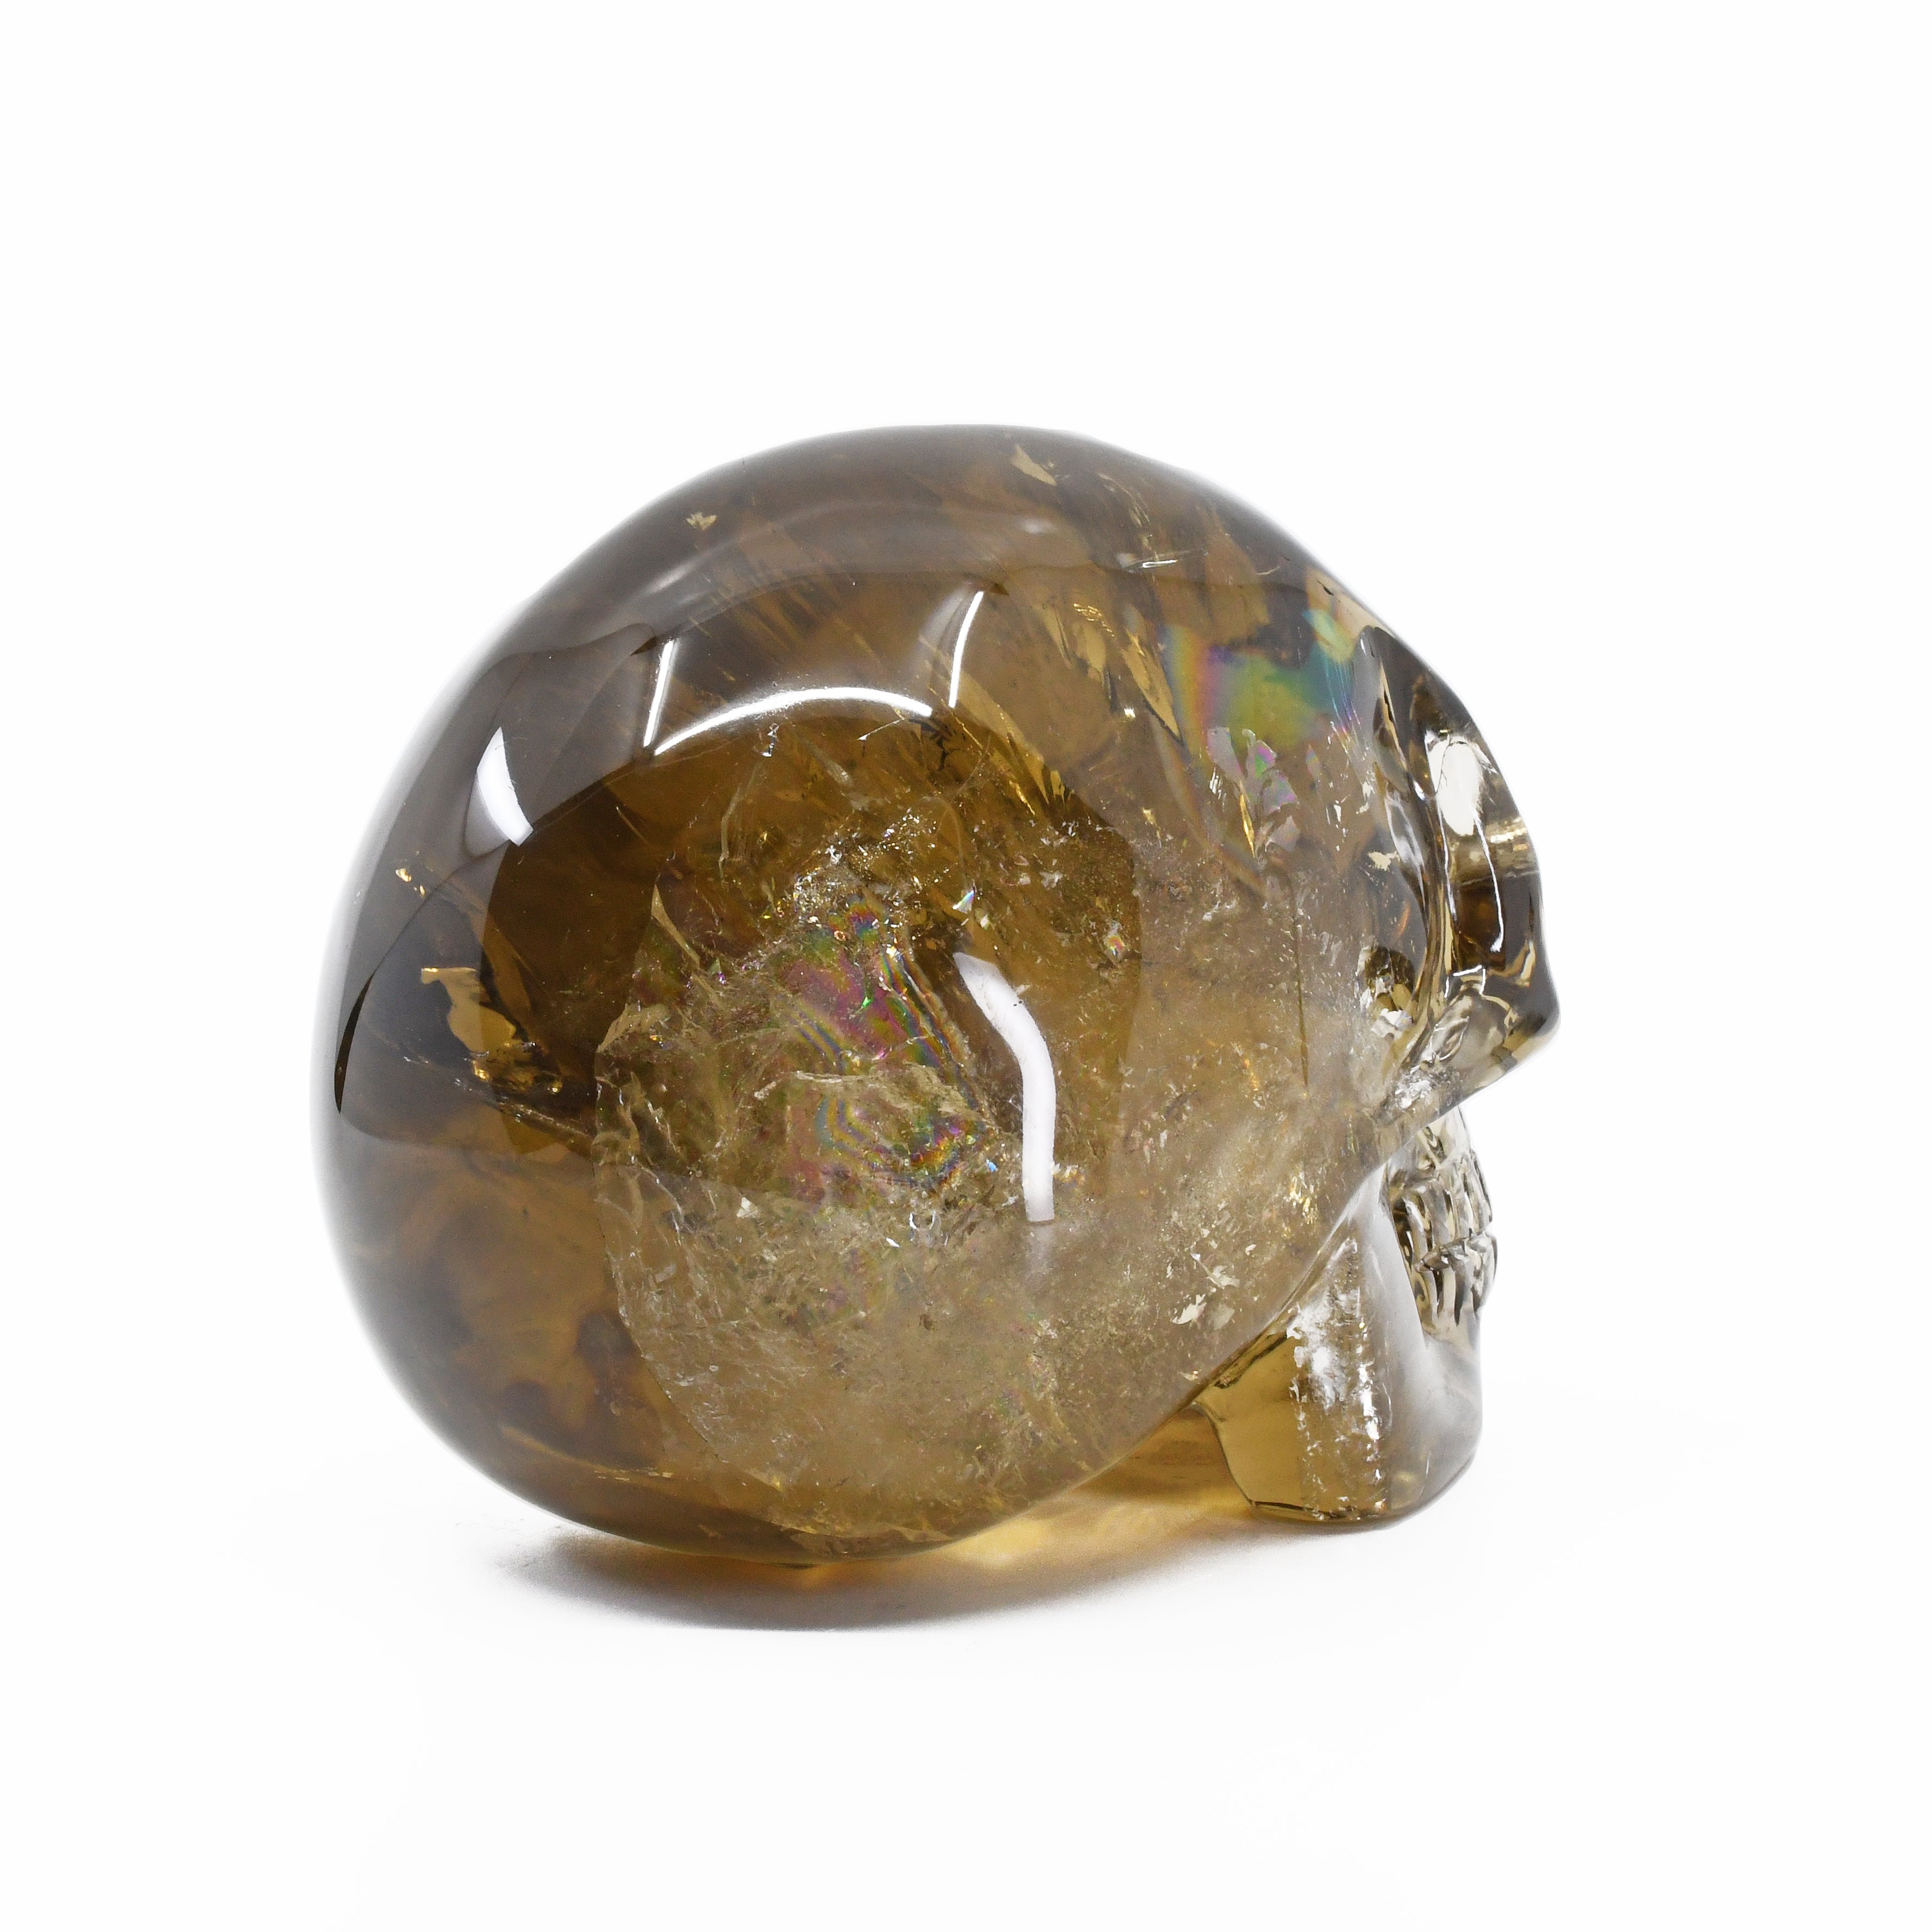 Citrine 5.51 inch 5.6 lbs Carved Crystal Skull - GGF-012 - Crystalarium